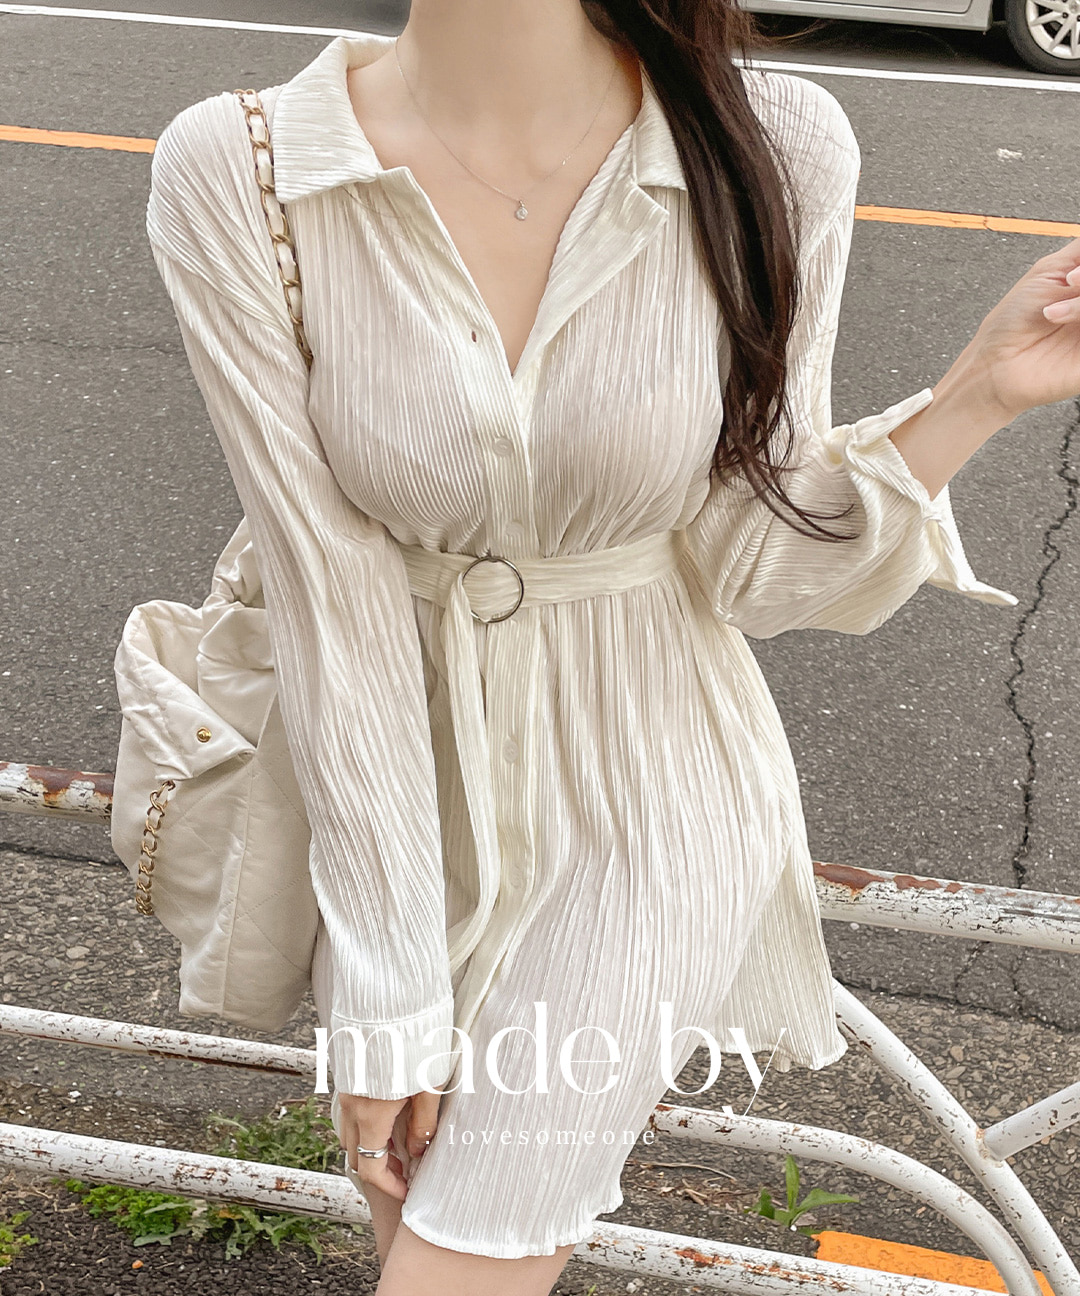 lovesome-one - [MADE] 플리츠 벨트 셔츠 미니 원피스(3차 재진행)신상/데일리룩/데일리/봄/여름/하객/데이트룩/세트/주름/플레어 - 러브썸원♡韓國女裝連身裙